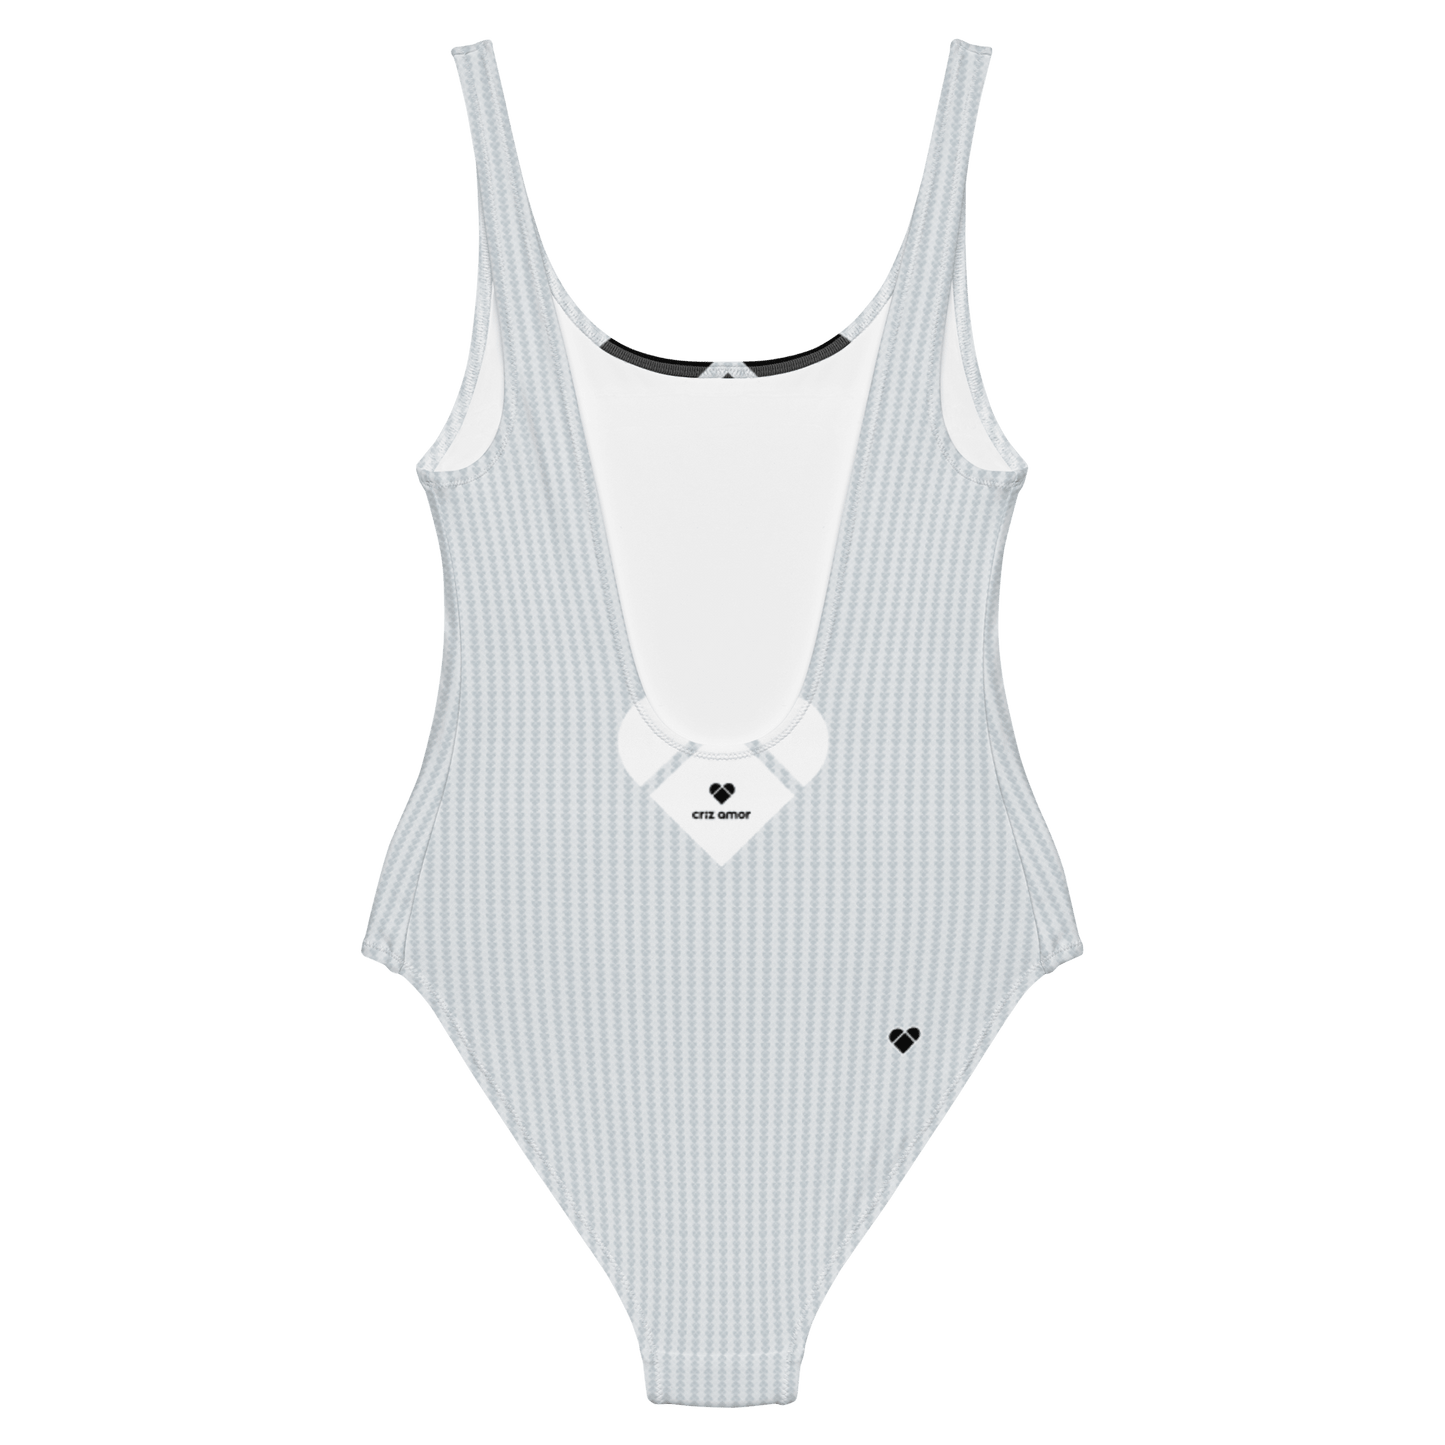 Amor Primero women's swimsuit featuring Lovogram heart logo design